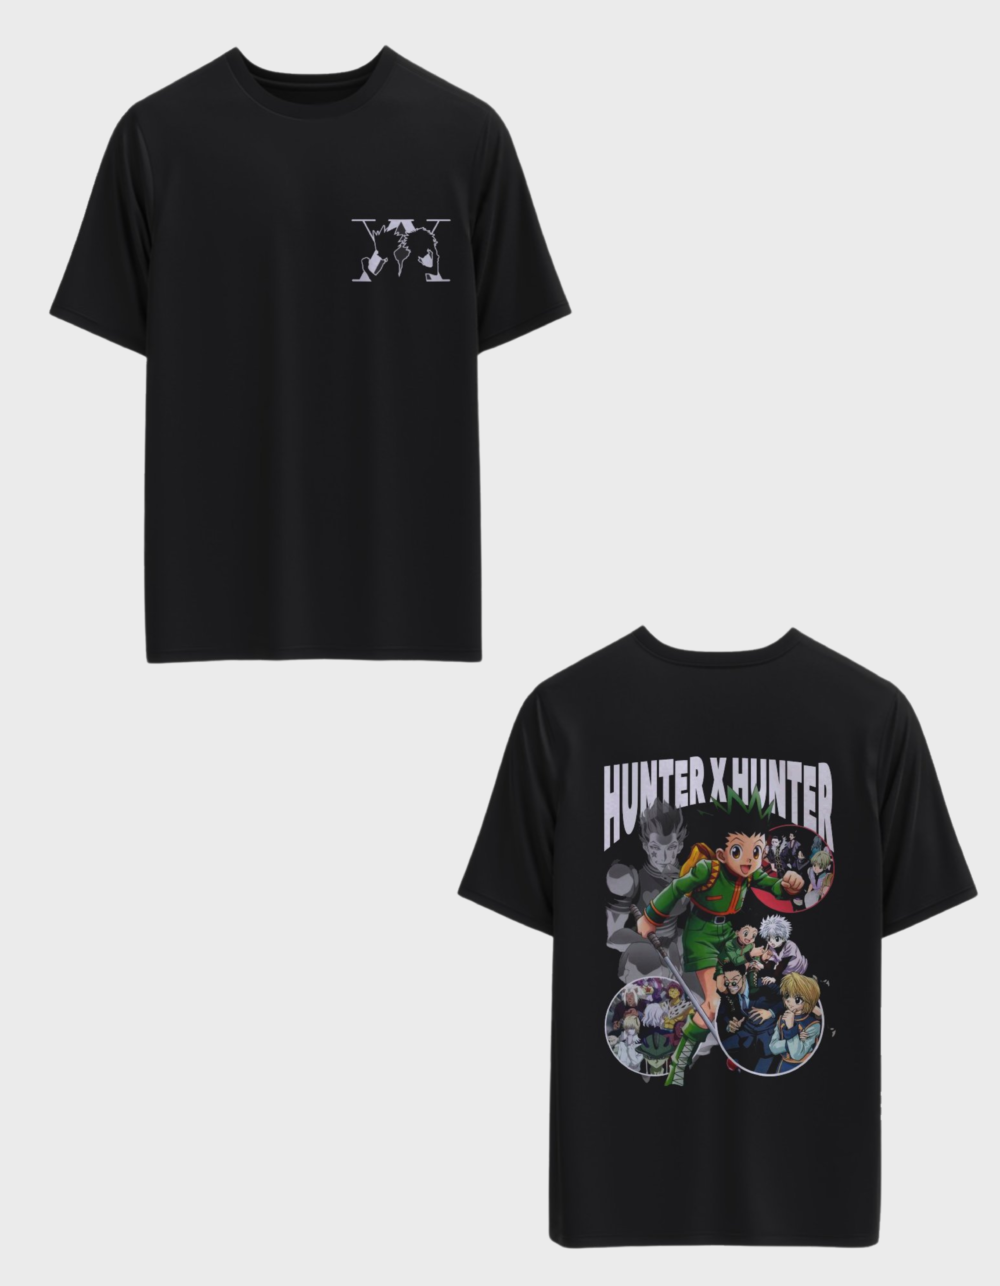 Gon Freecss - HunterxHunter High quality Dual Print Oversized T-shirt